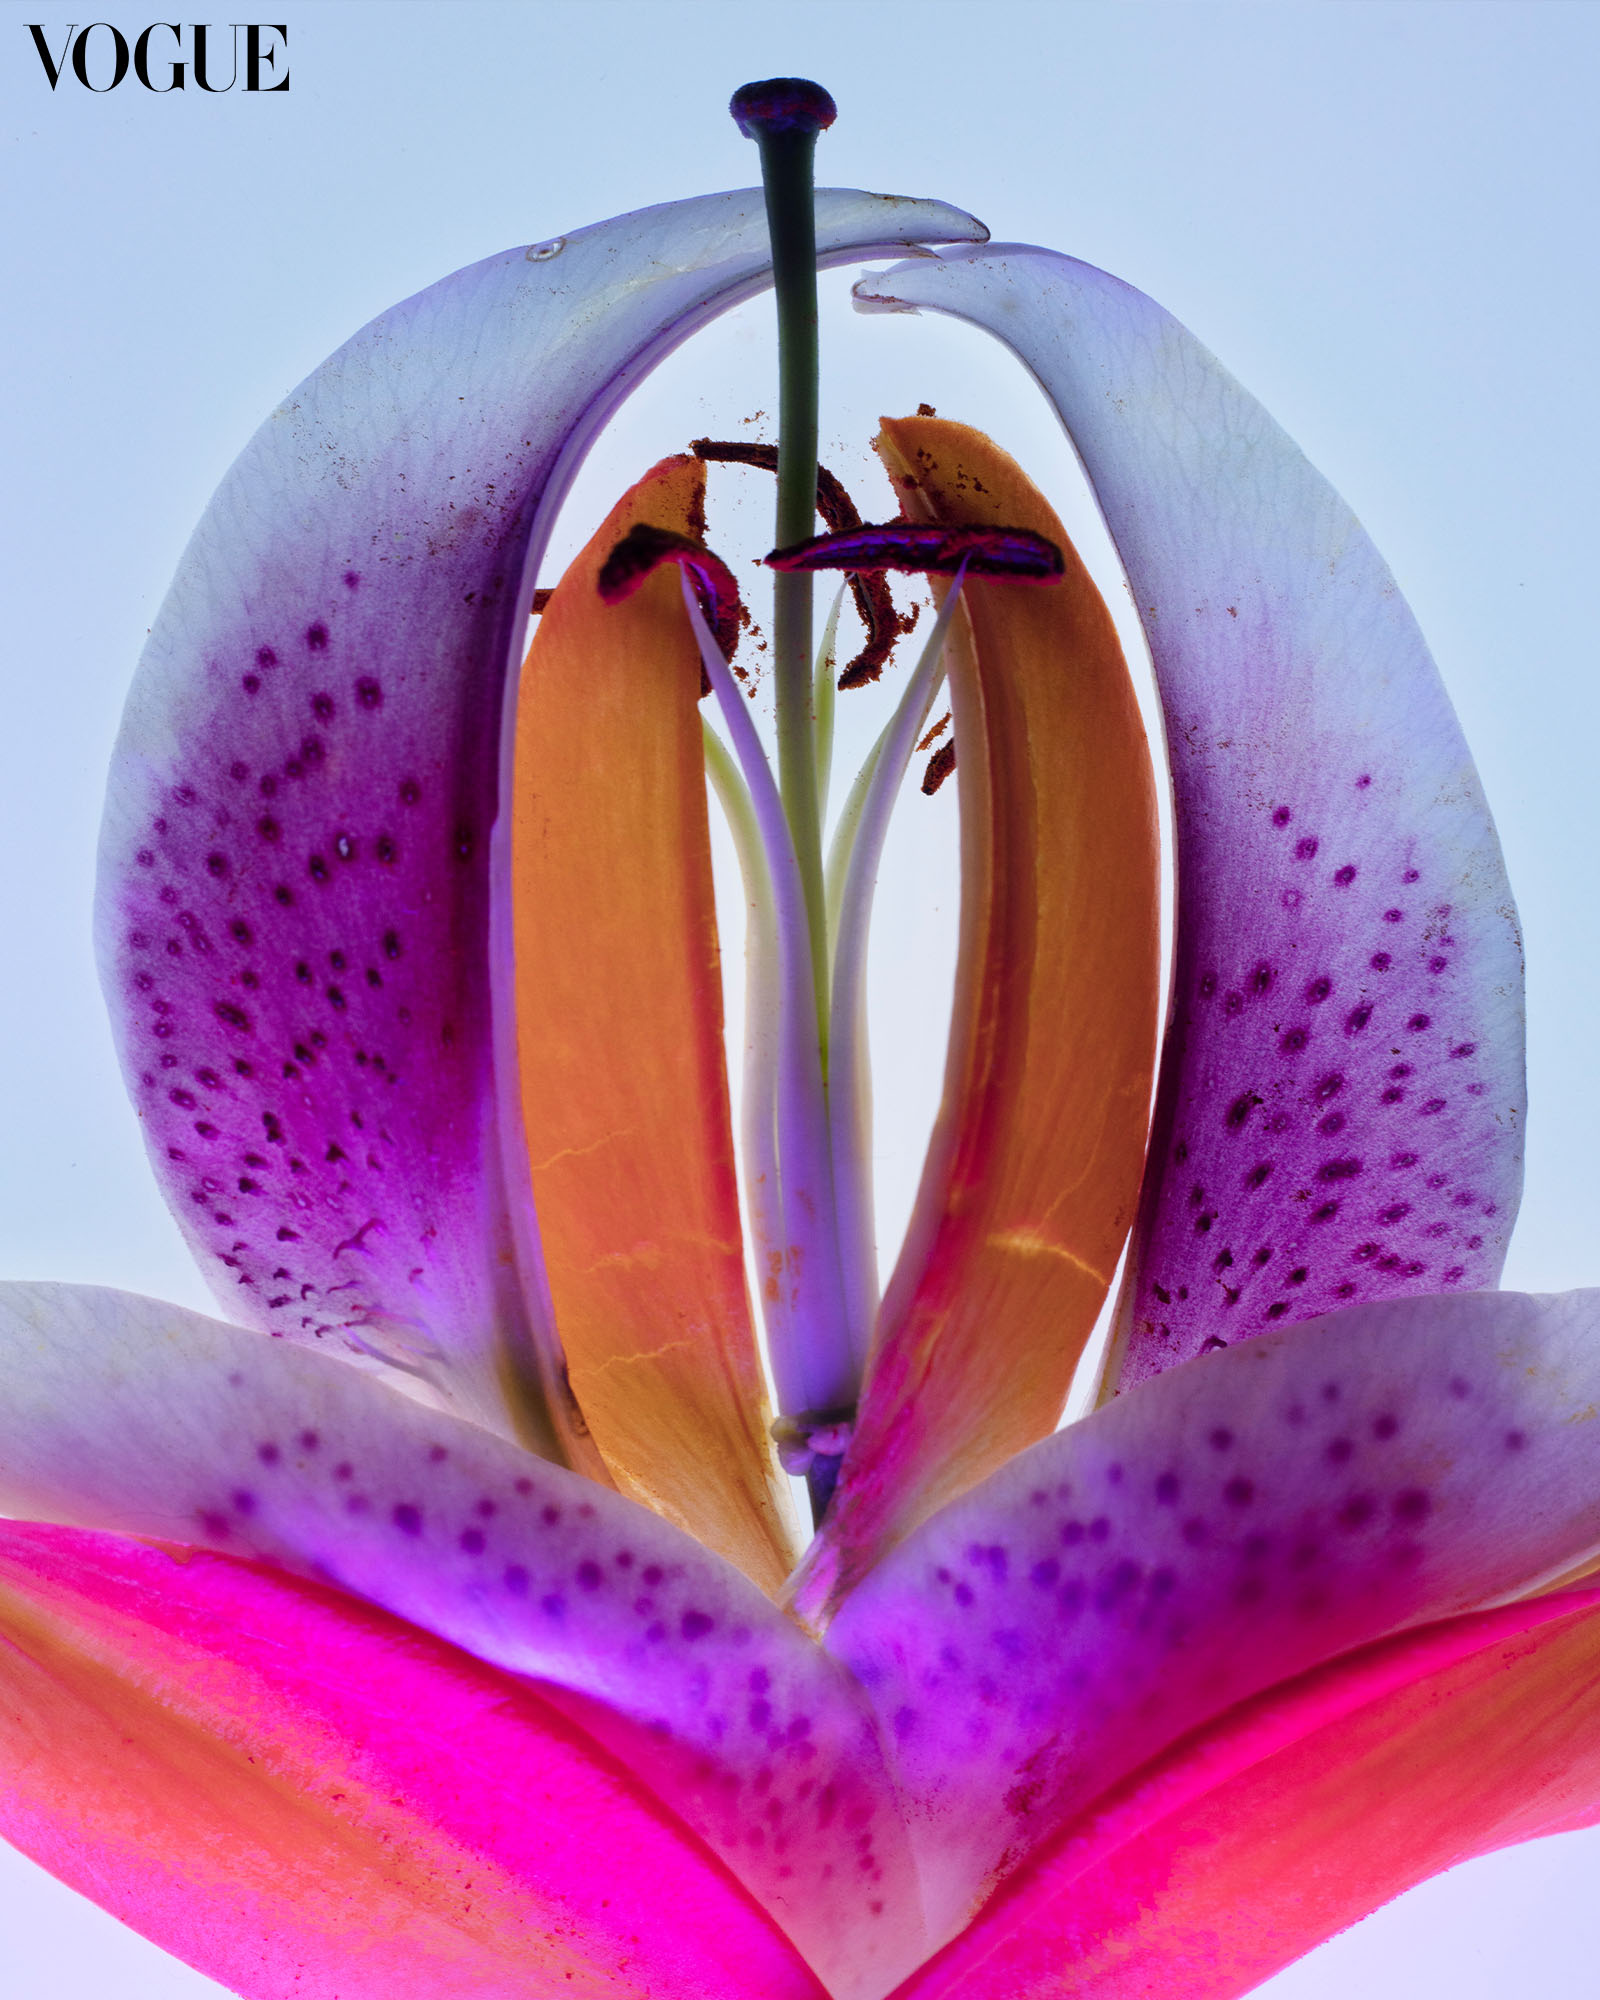 Flower petals arranged to look like the vulva.